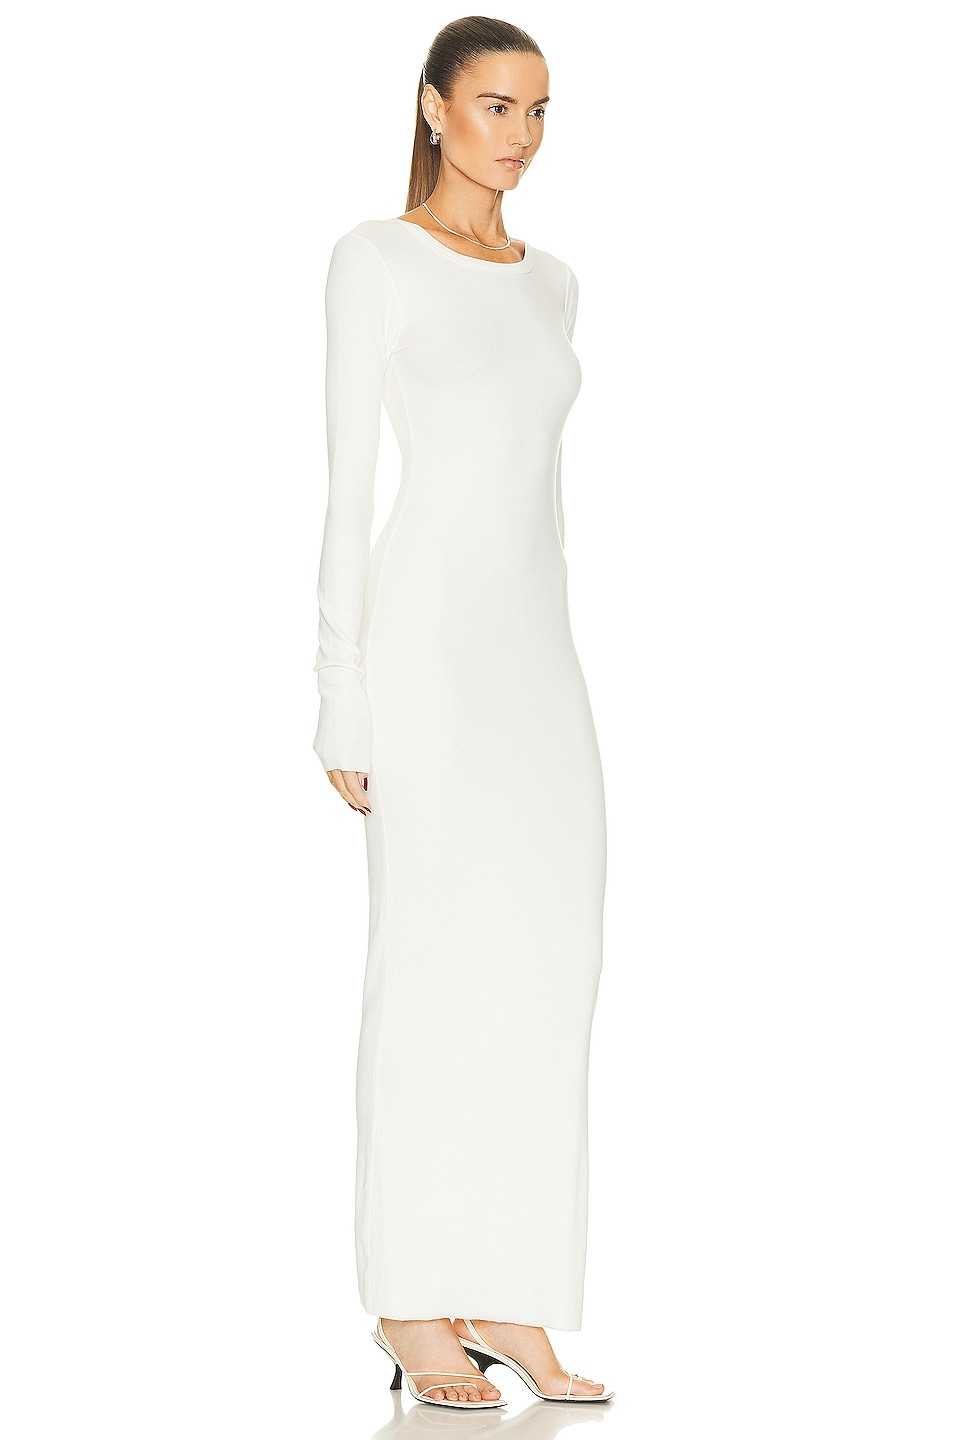 Eterne Long Sleeve Crewneck Maxi Dress in Cream | FWRD